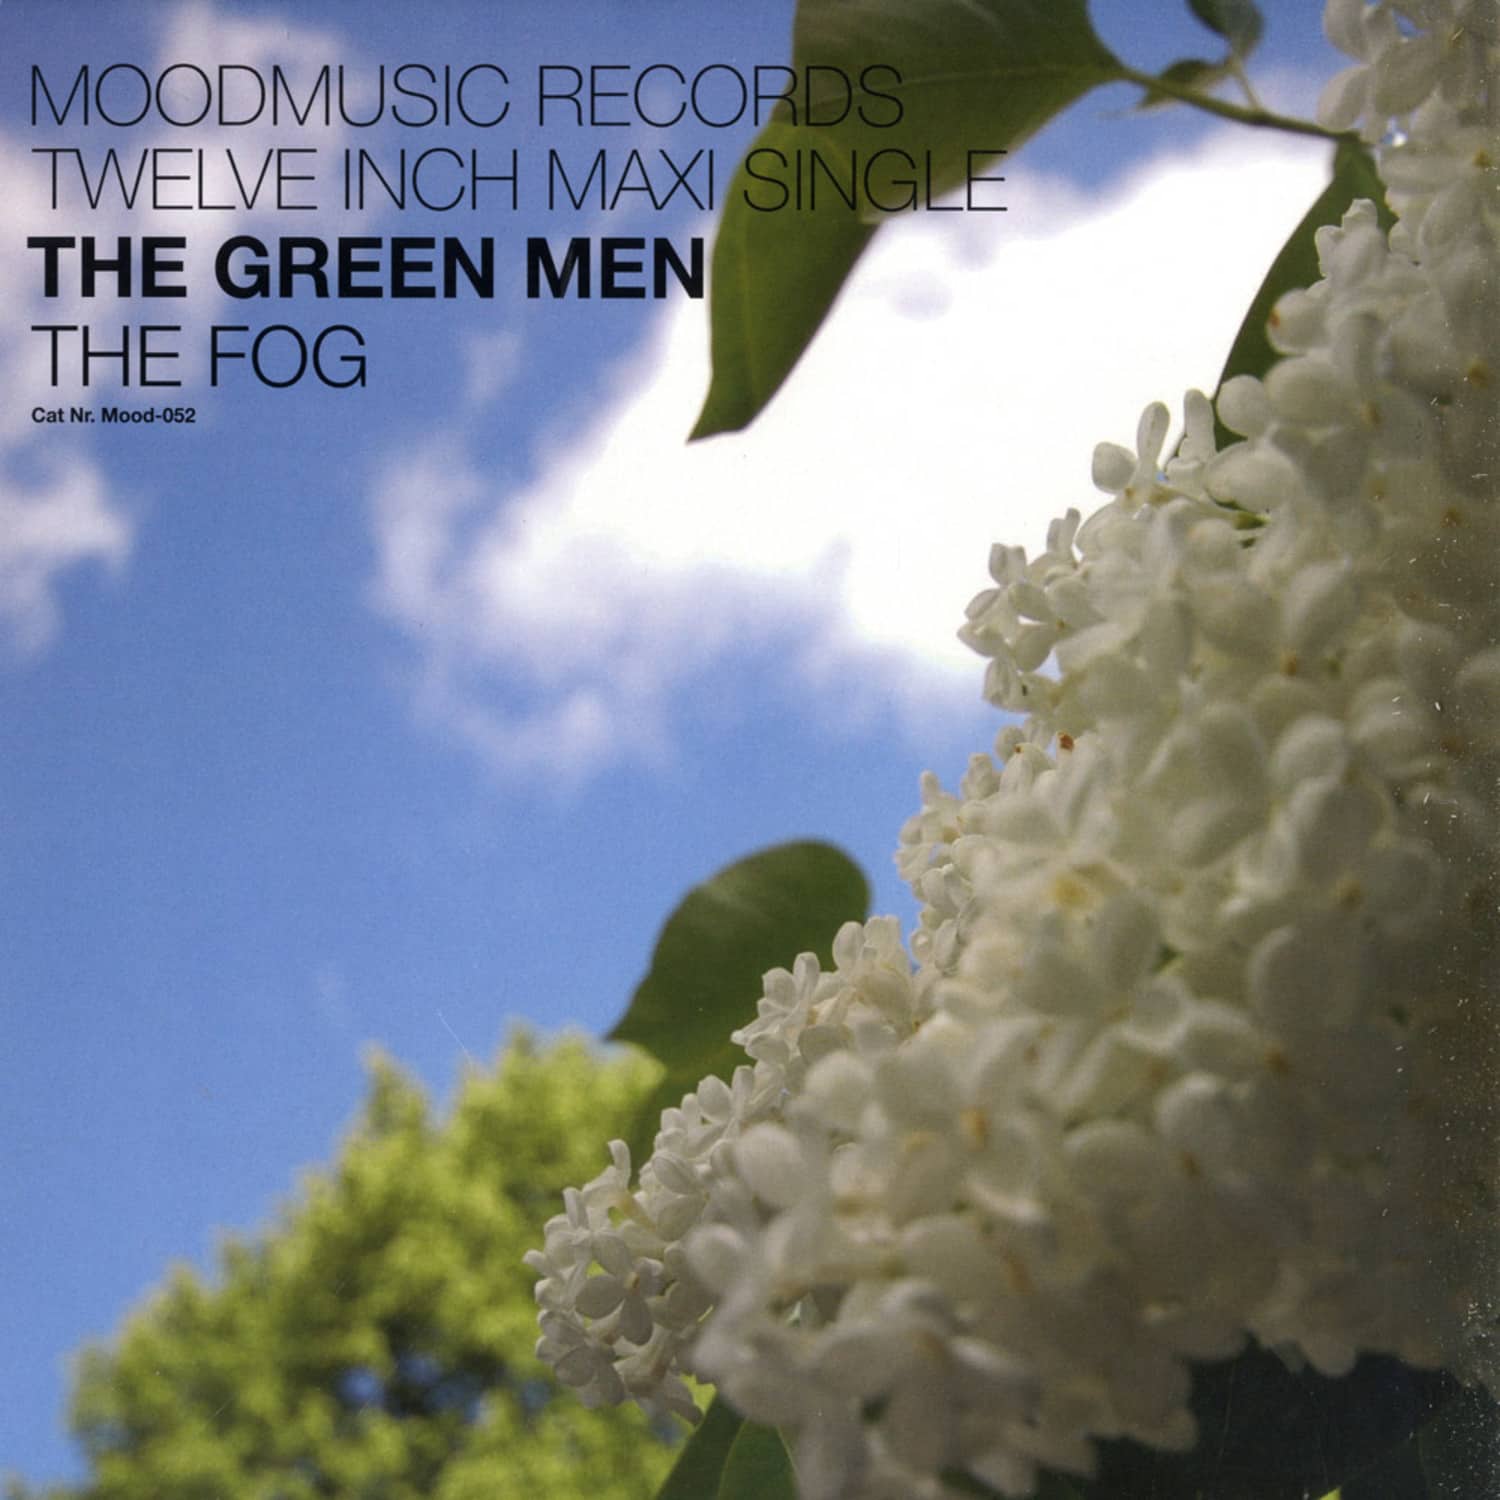 The Green Men - THE FOG / DARSHAN JESRANI RMX